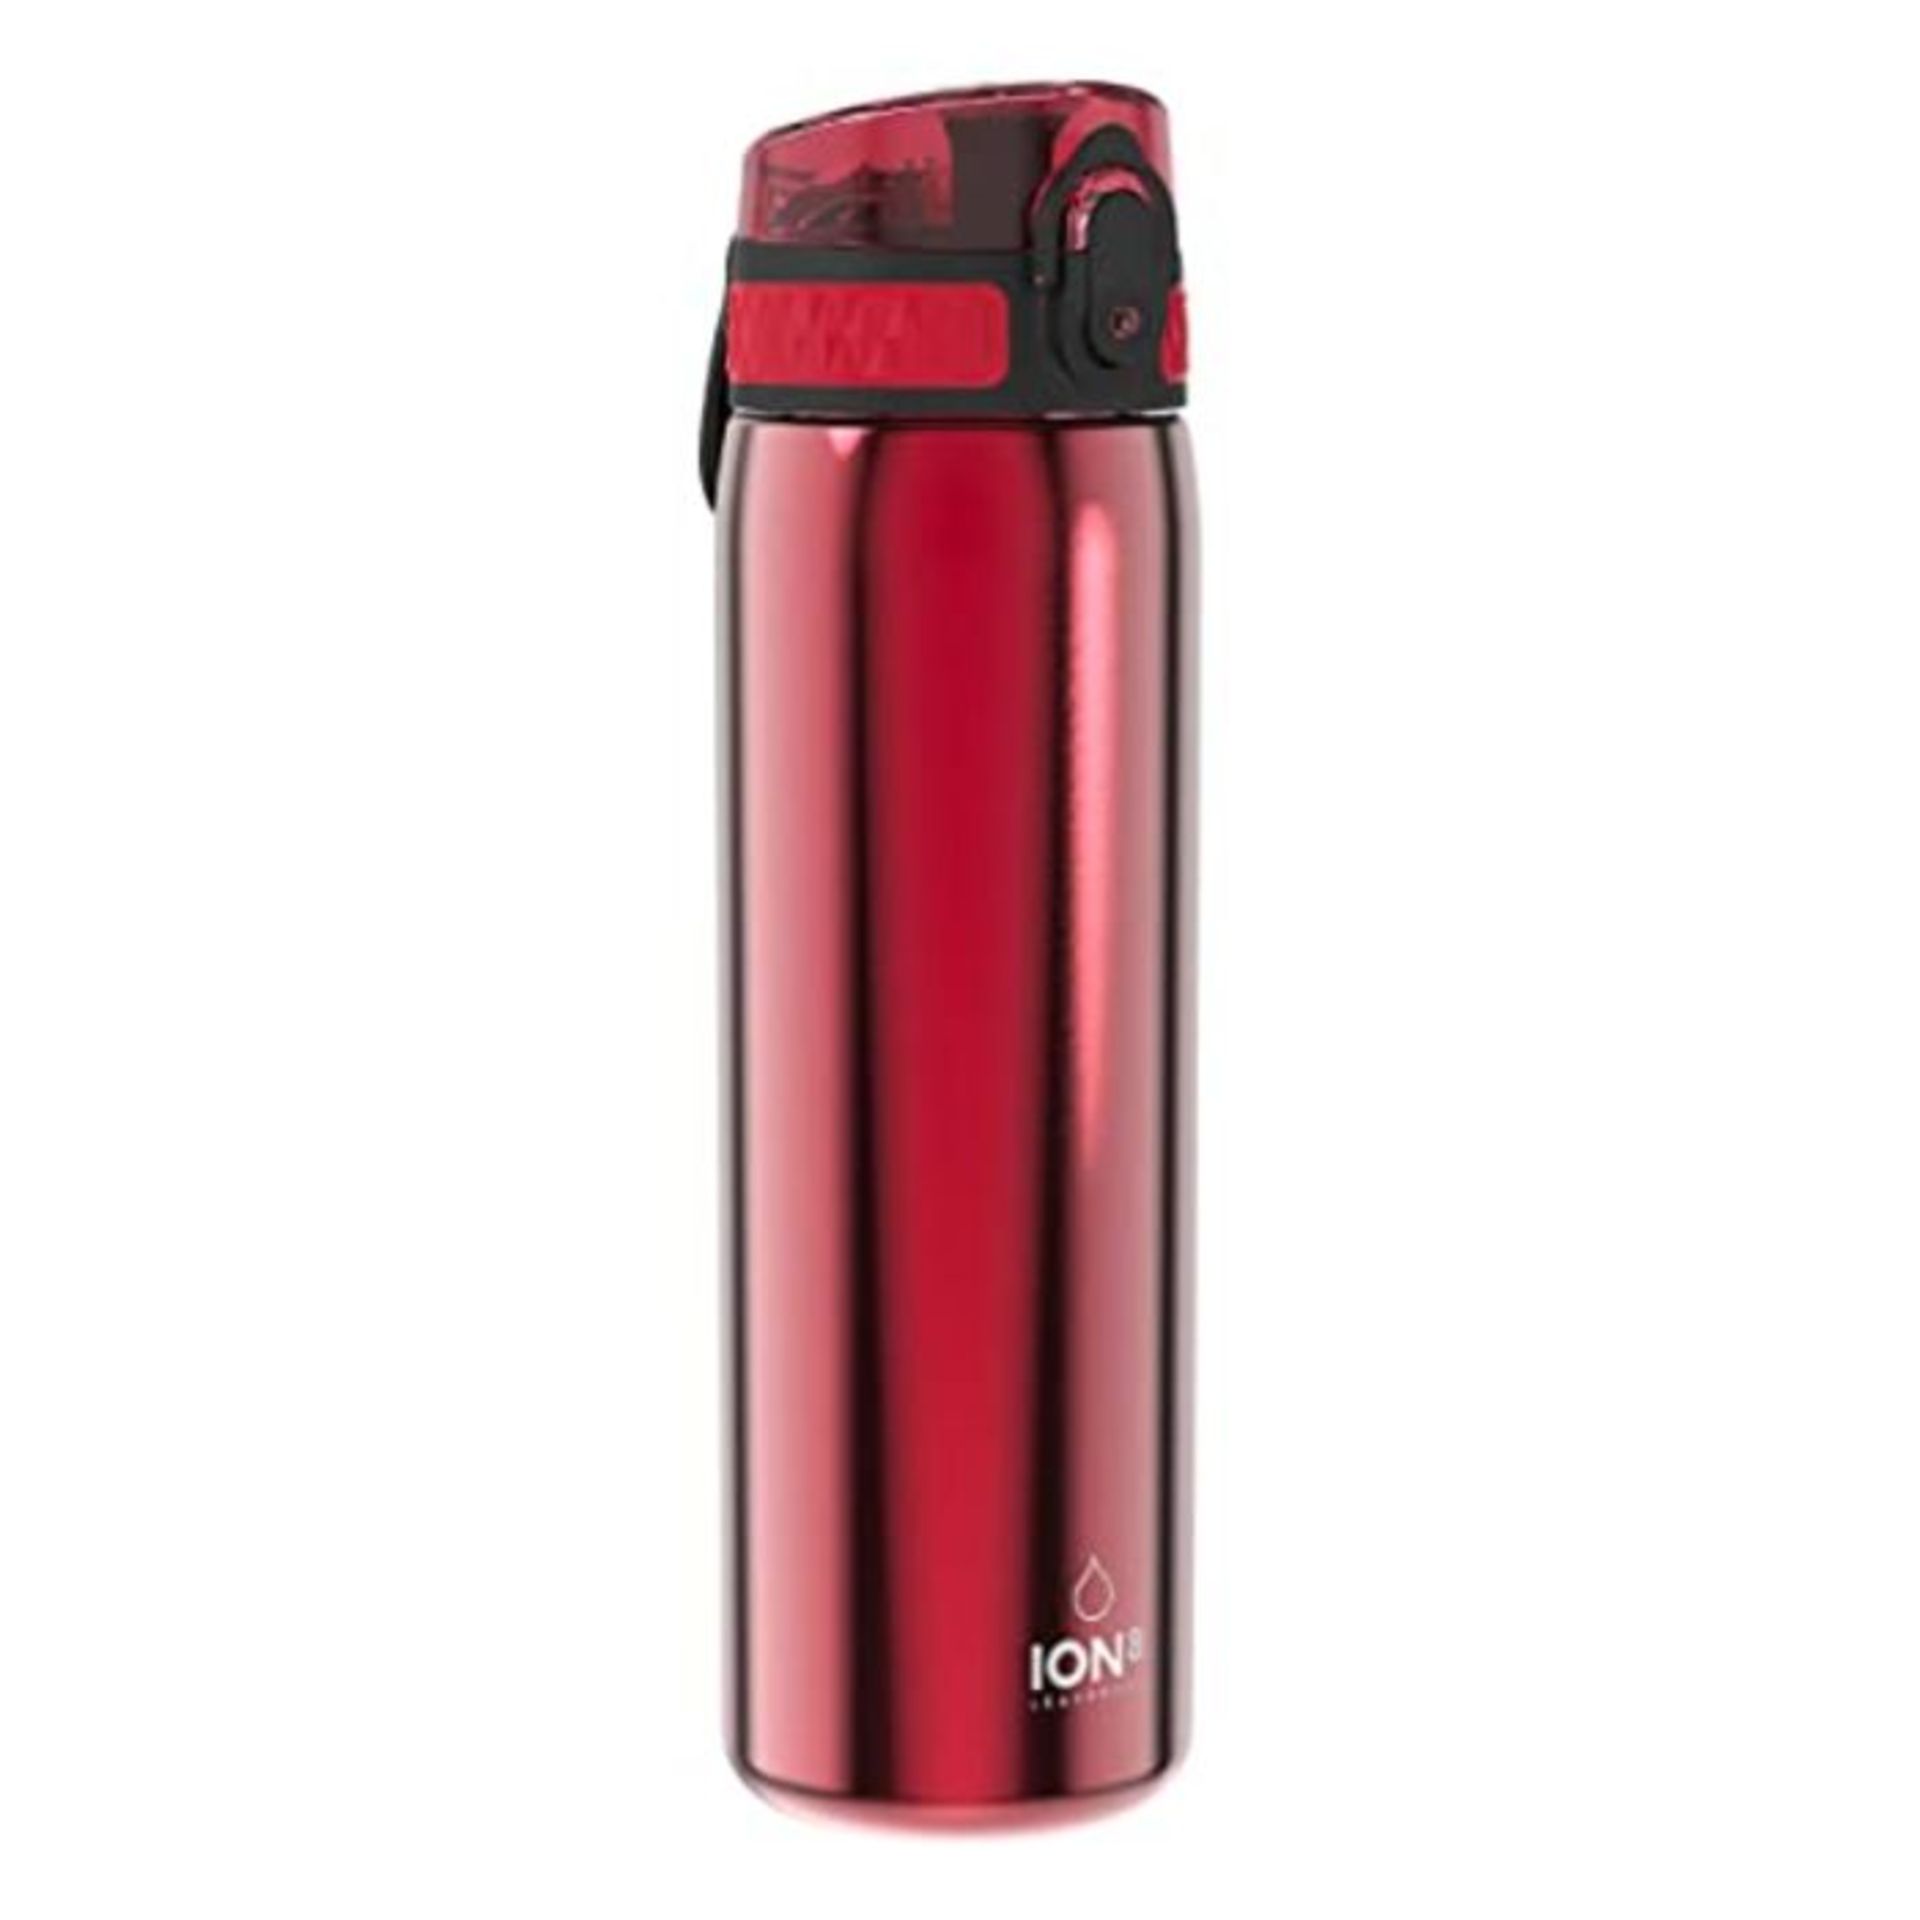 Ion8 Leak Proof Slim Water Bottle, Stainless Steel, 600ml (20oz), Red